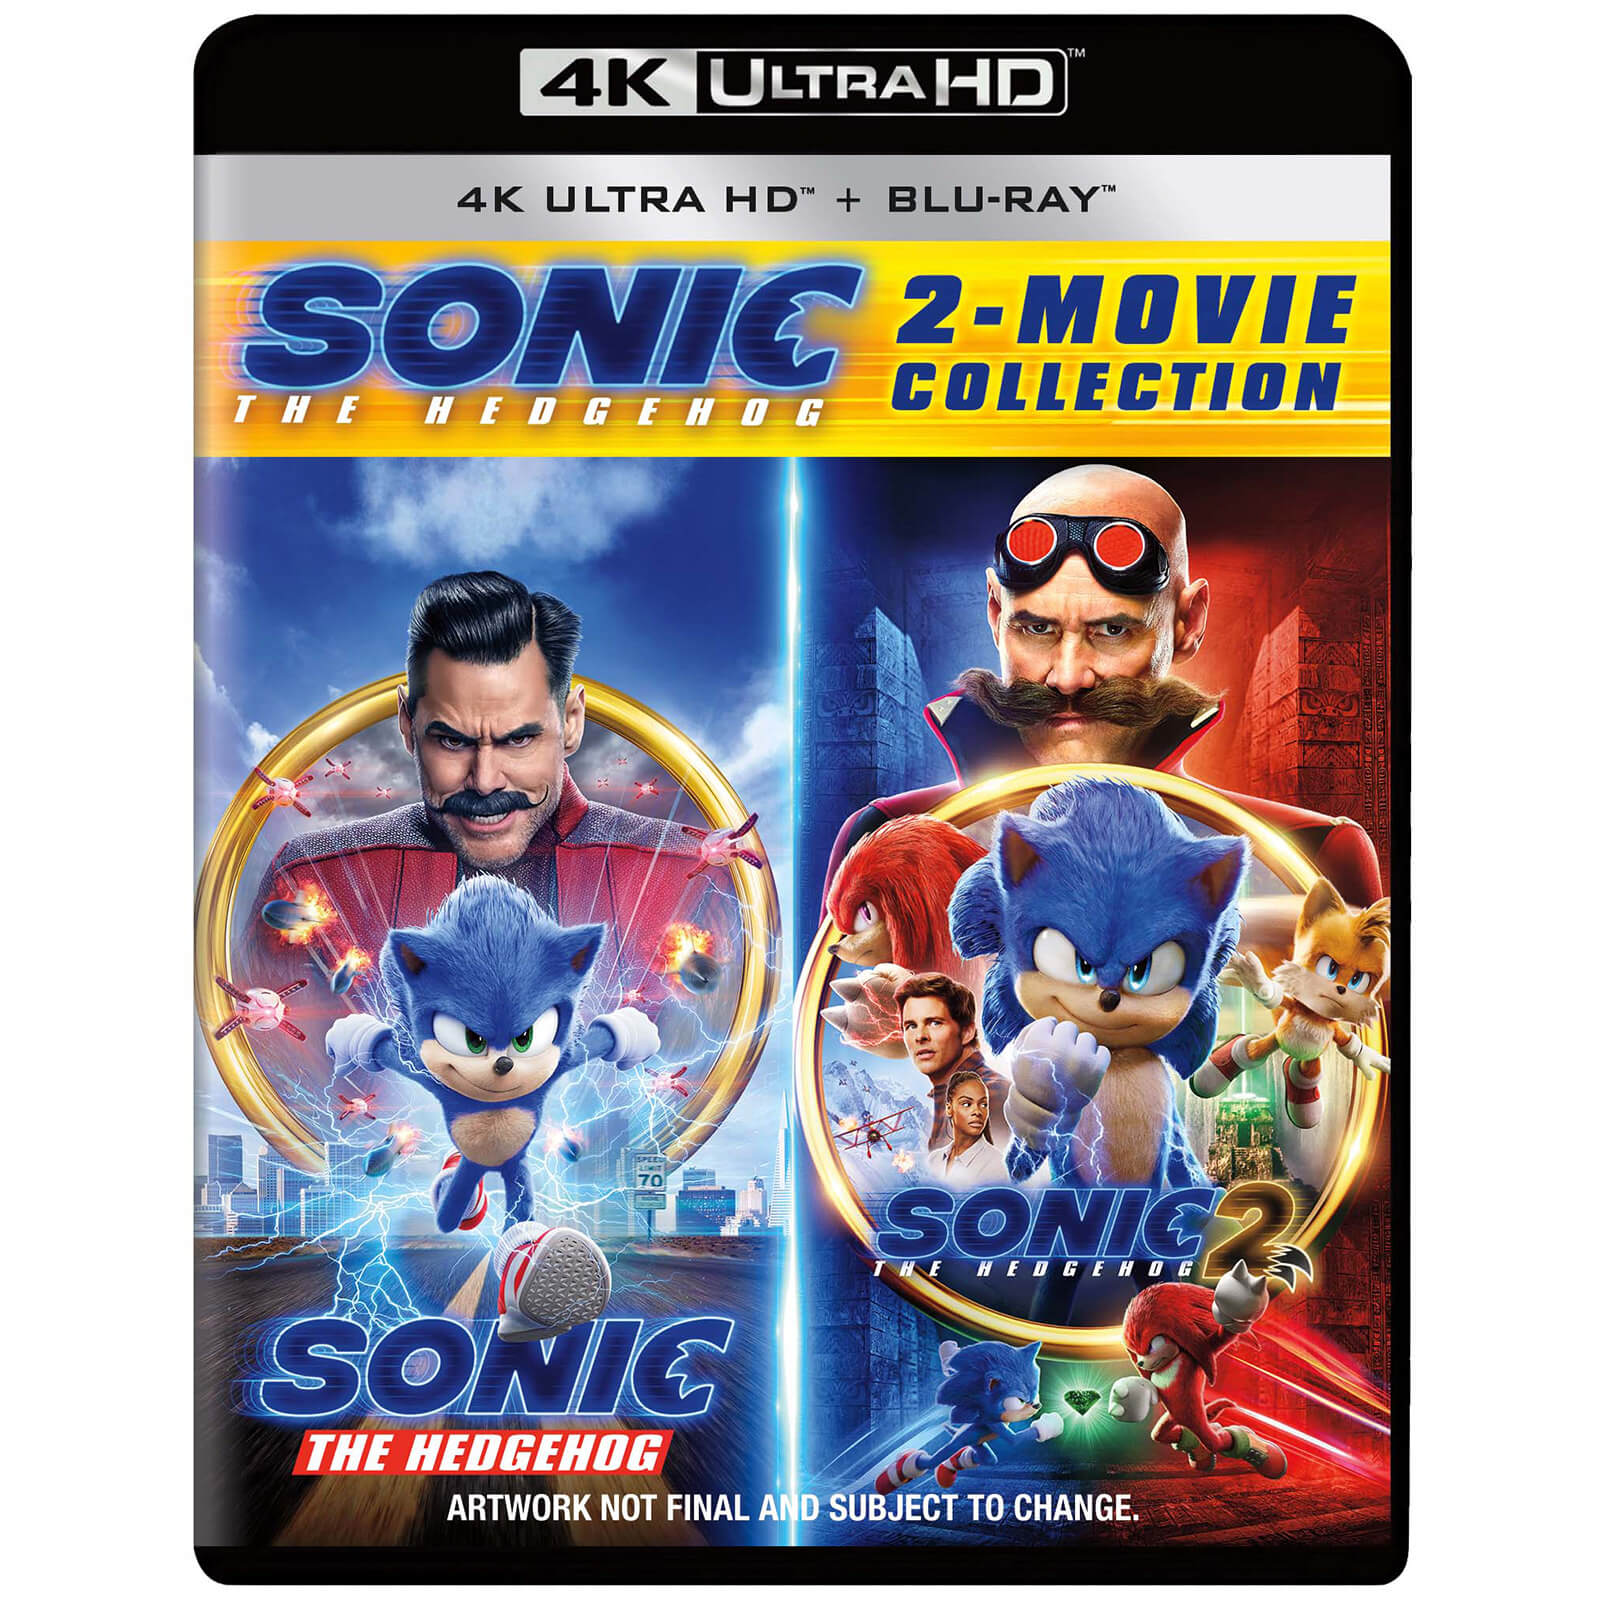 Sonic The Hedgehog 1 & 2 4K Ultra HD